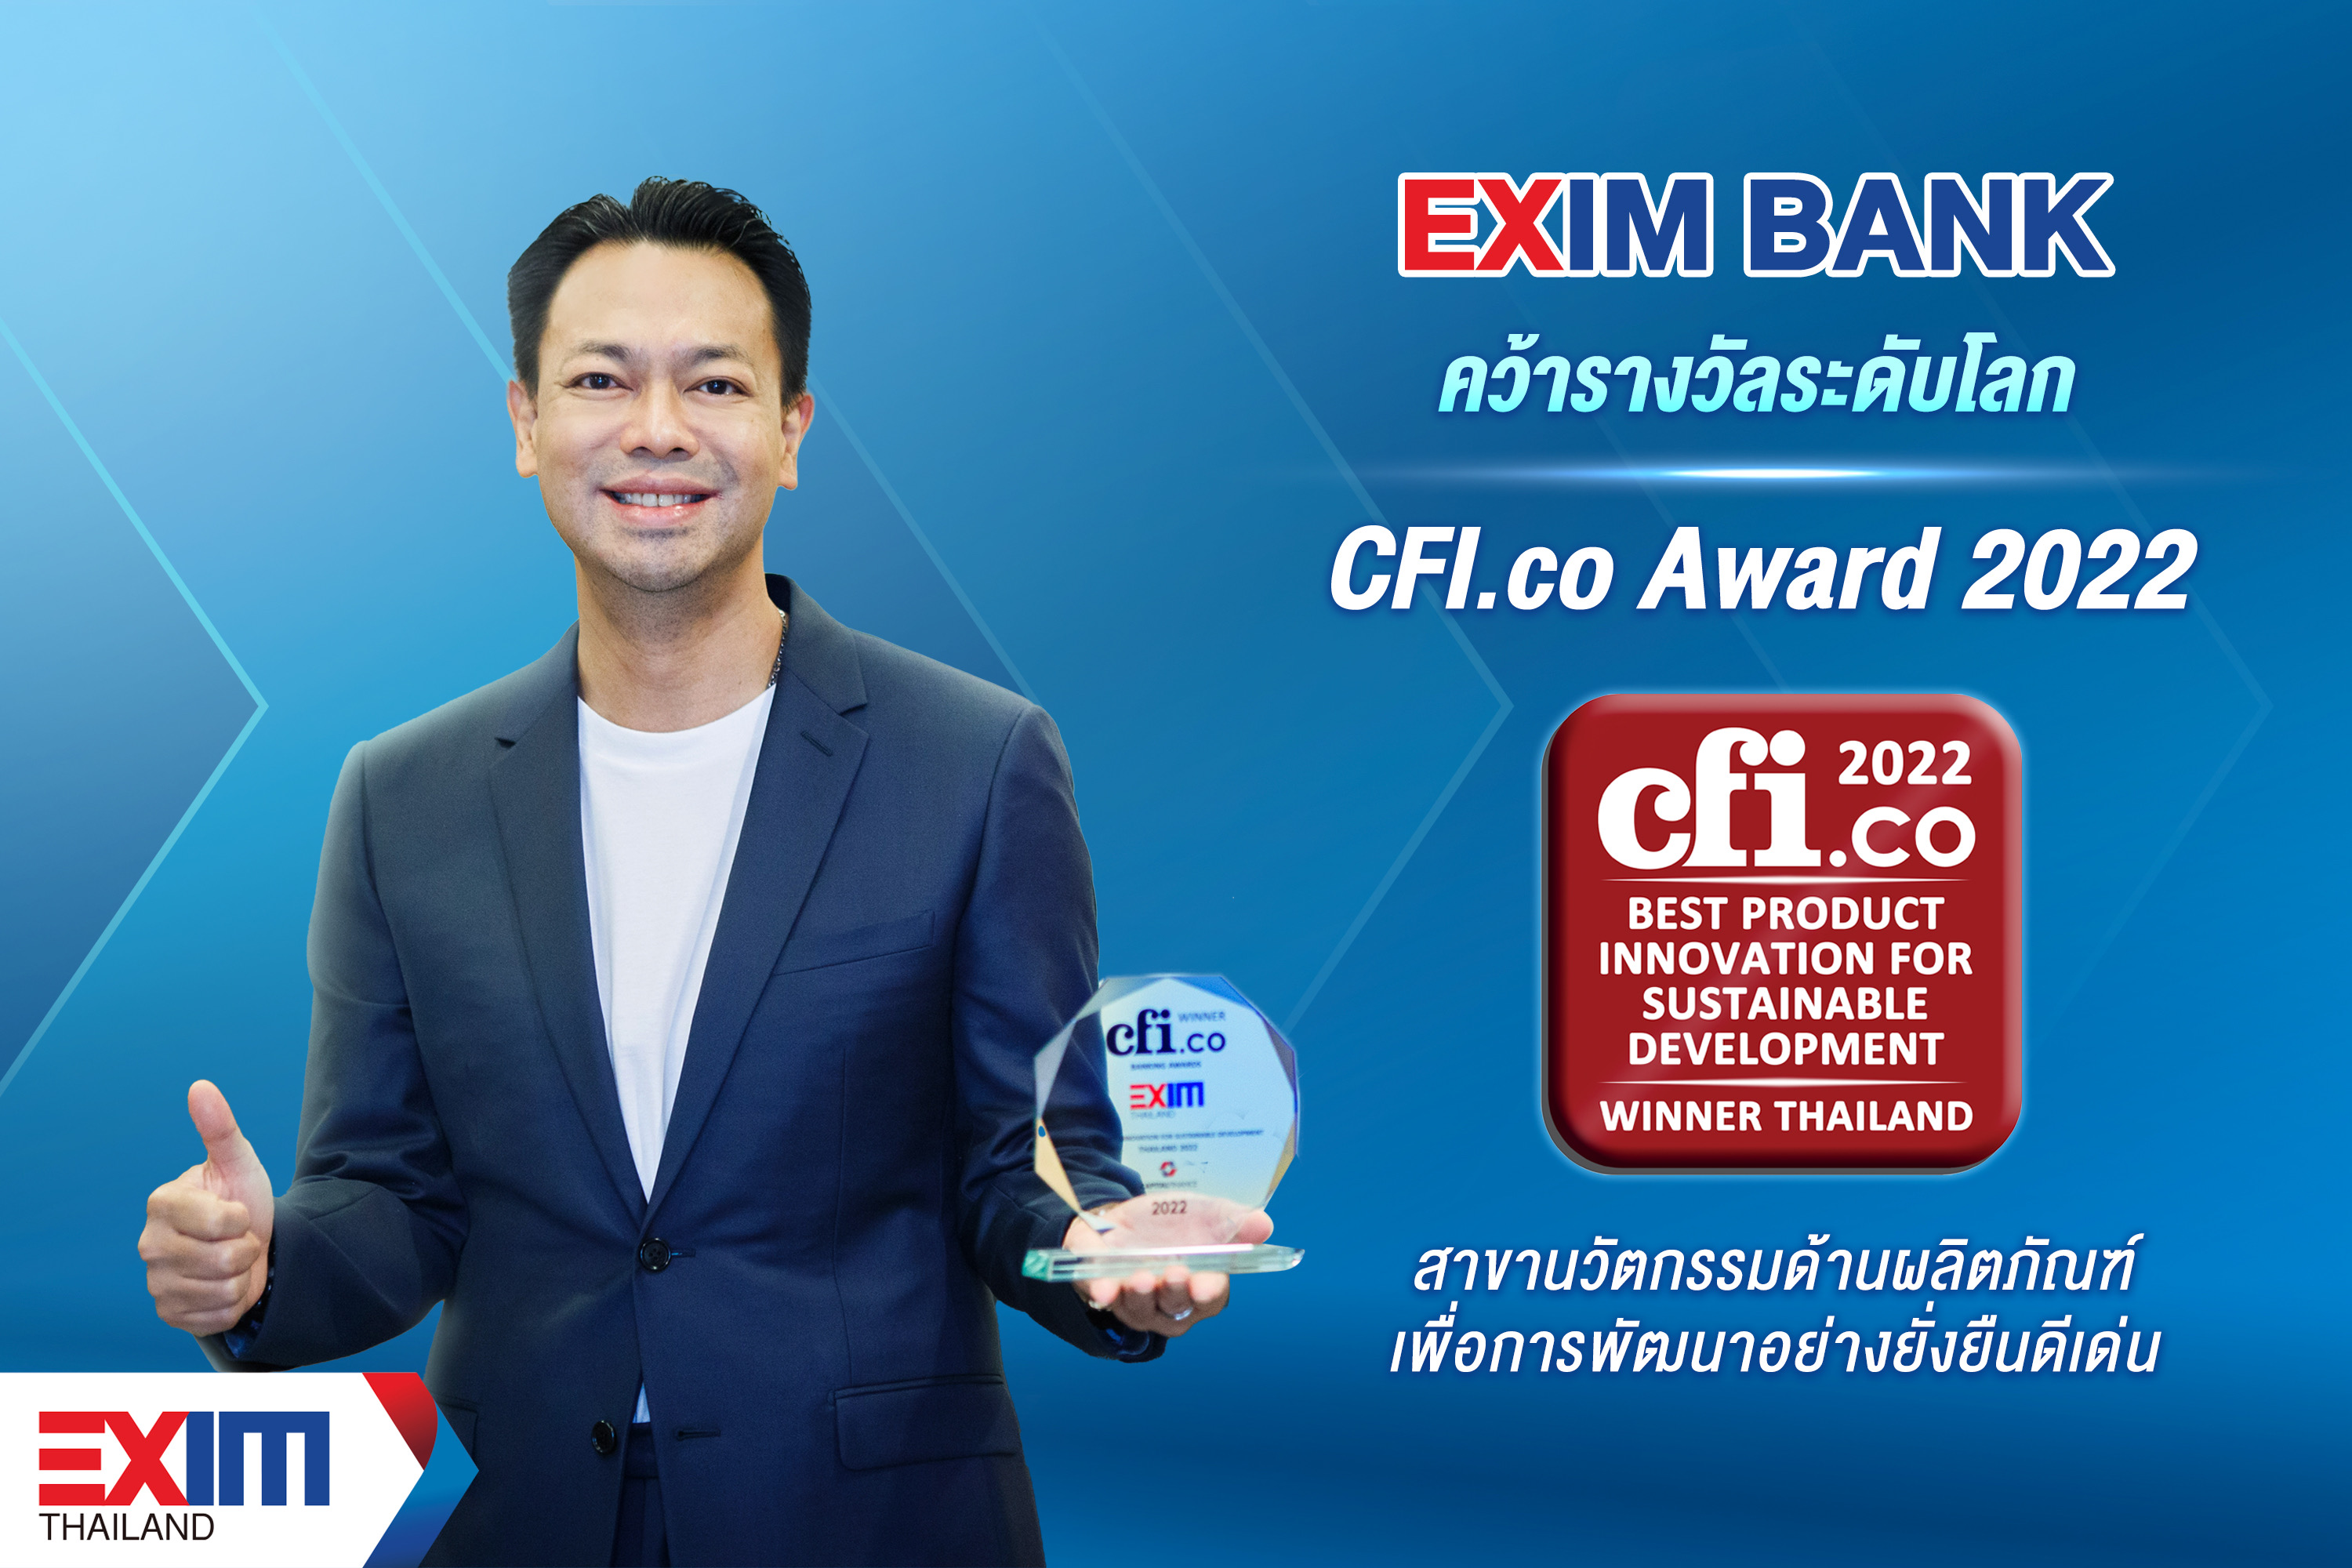 EXIM BANK คว้ารางวัลระดับโลก CFI.co Award 2022